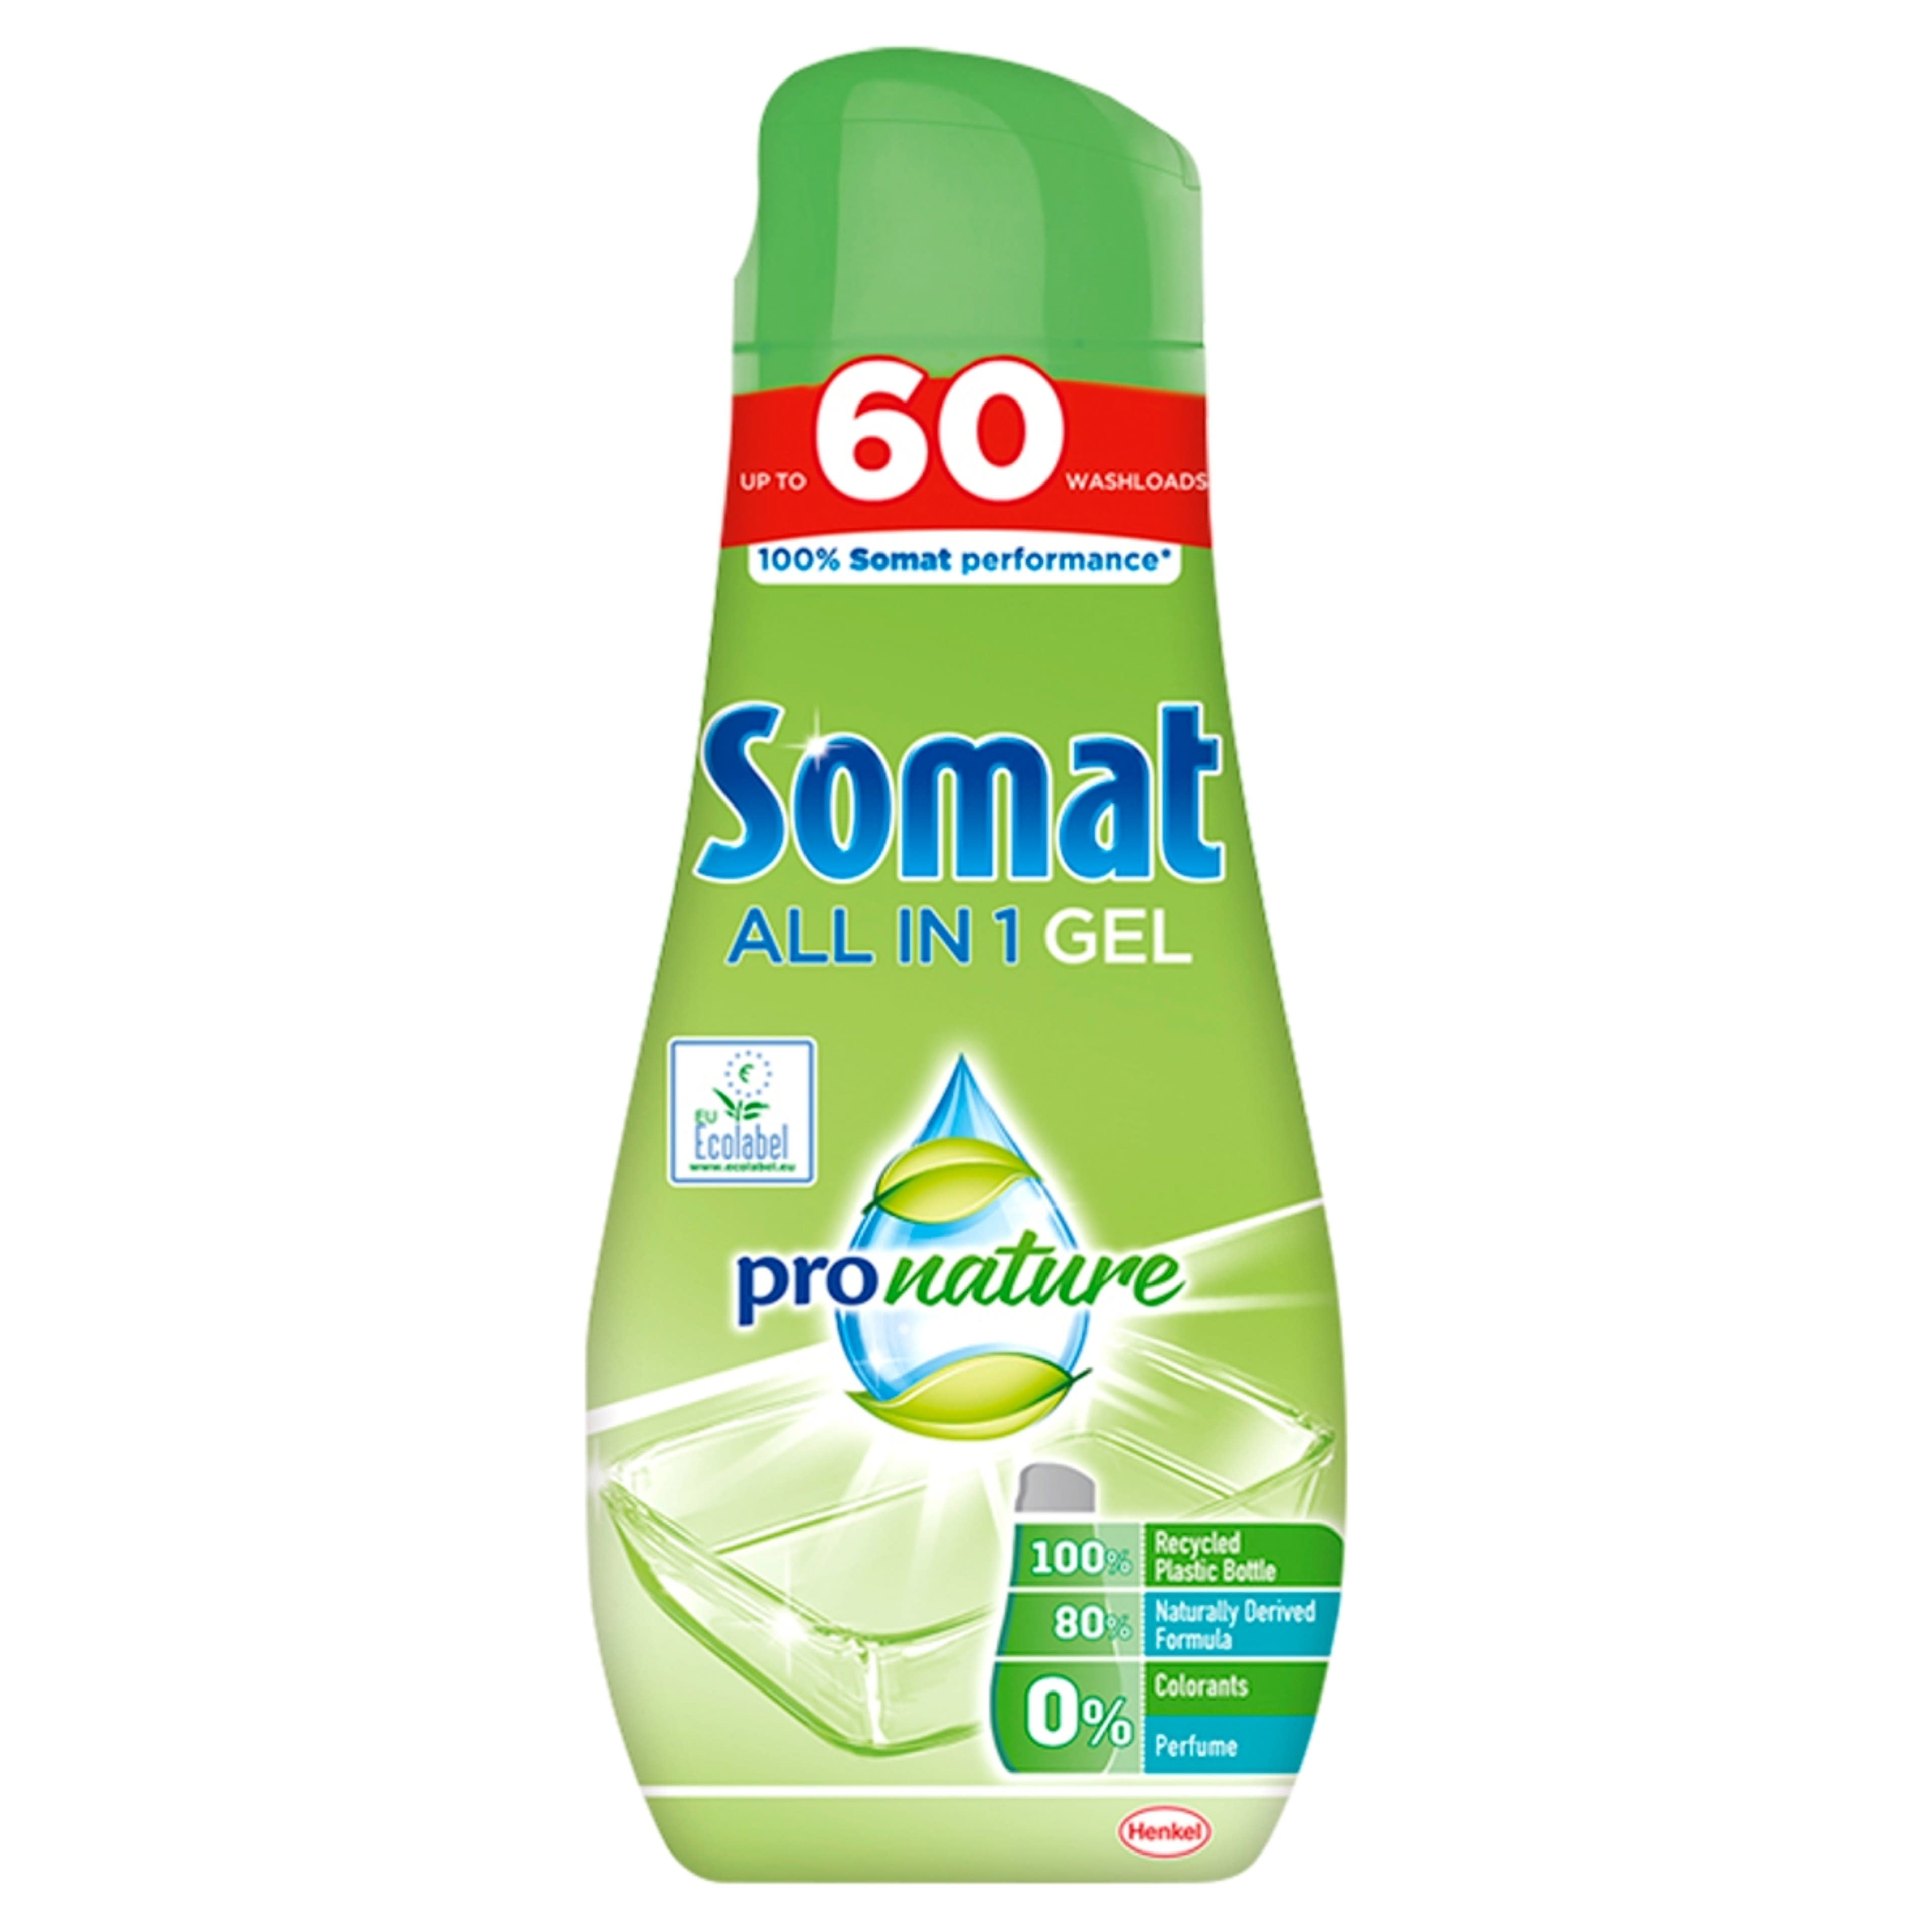 Somat All in 1 pronature mosogatógél 60WL - 960 ml-1